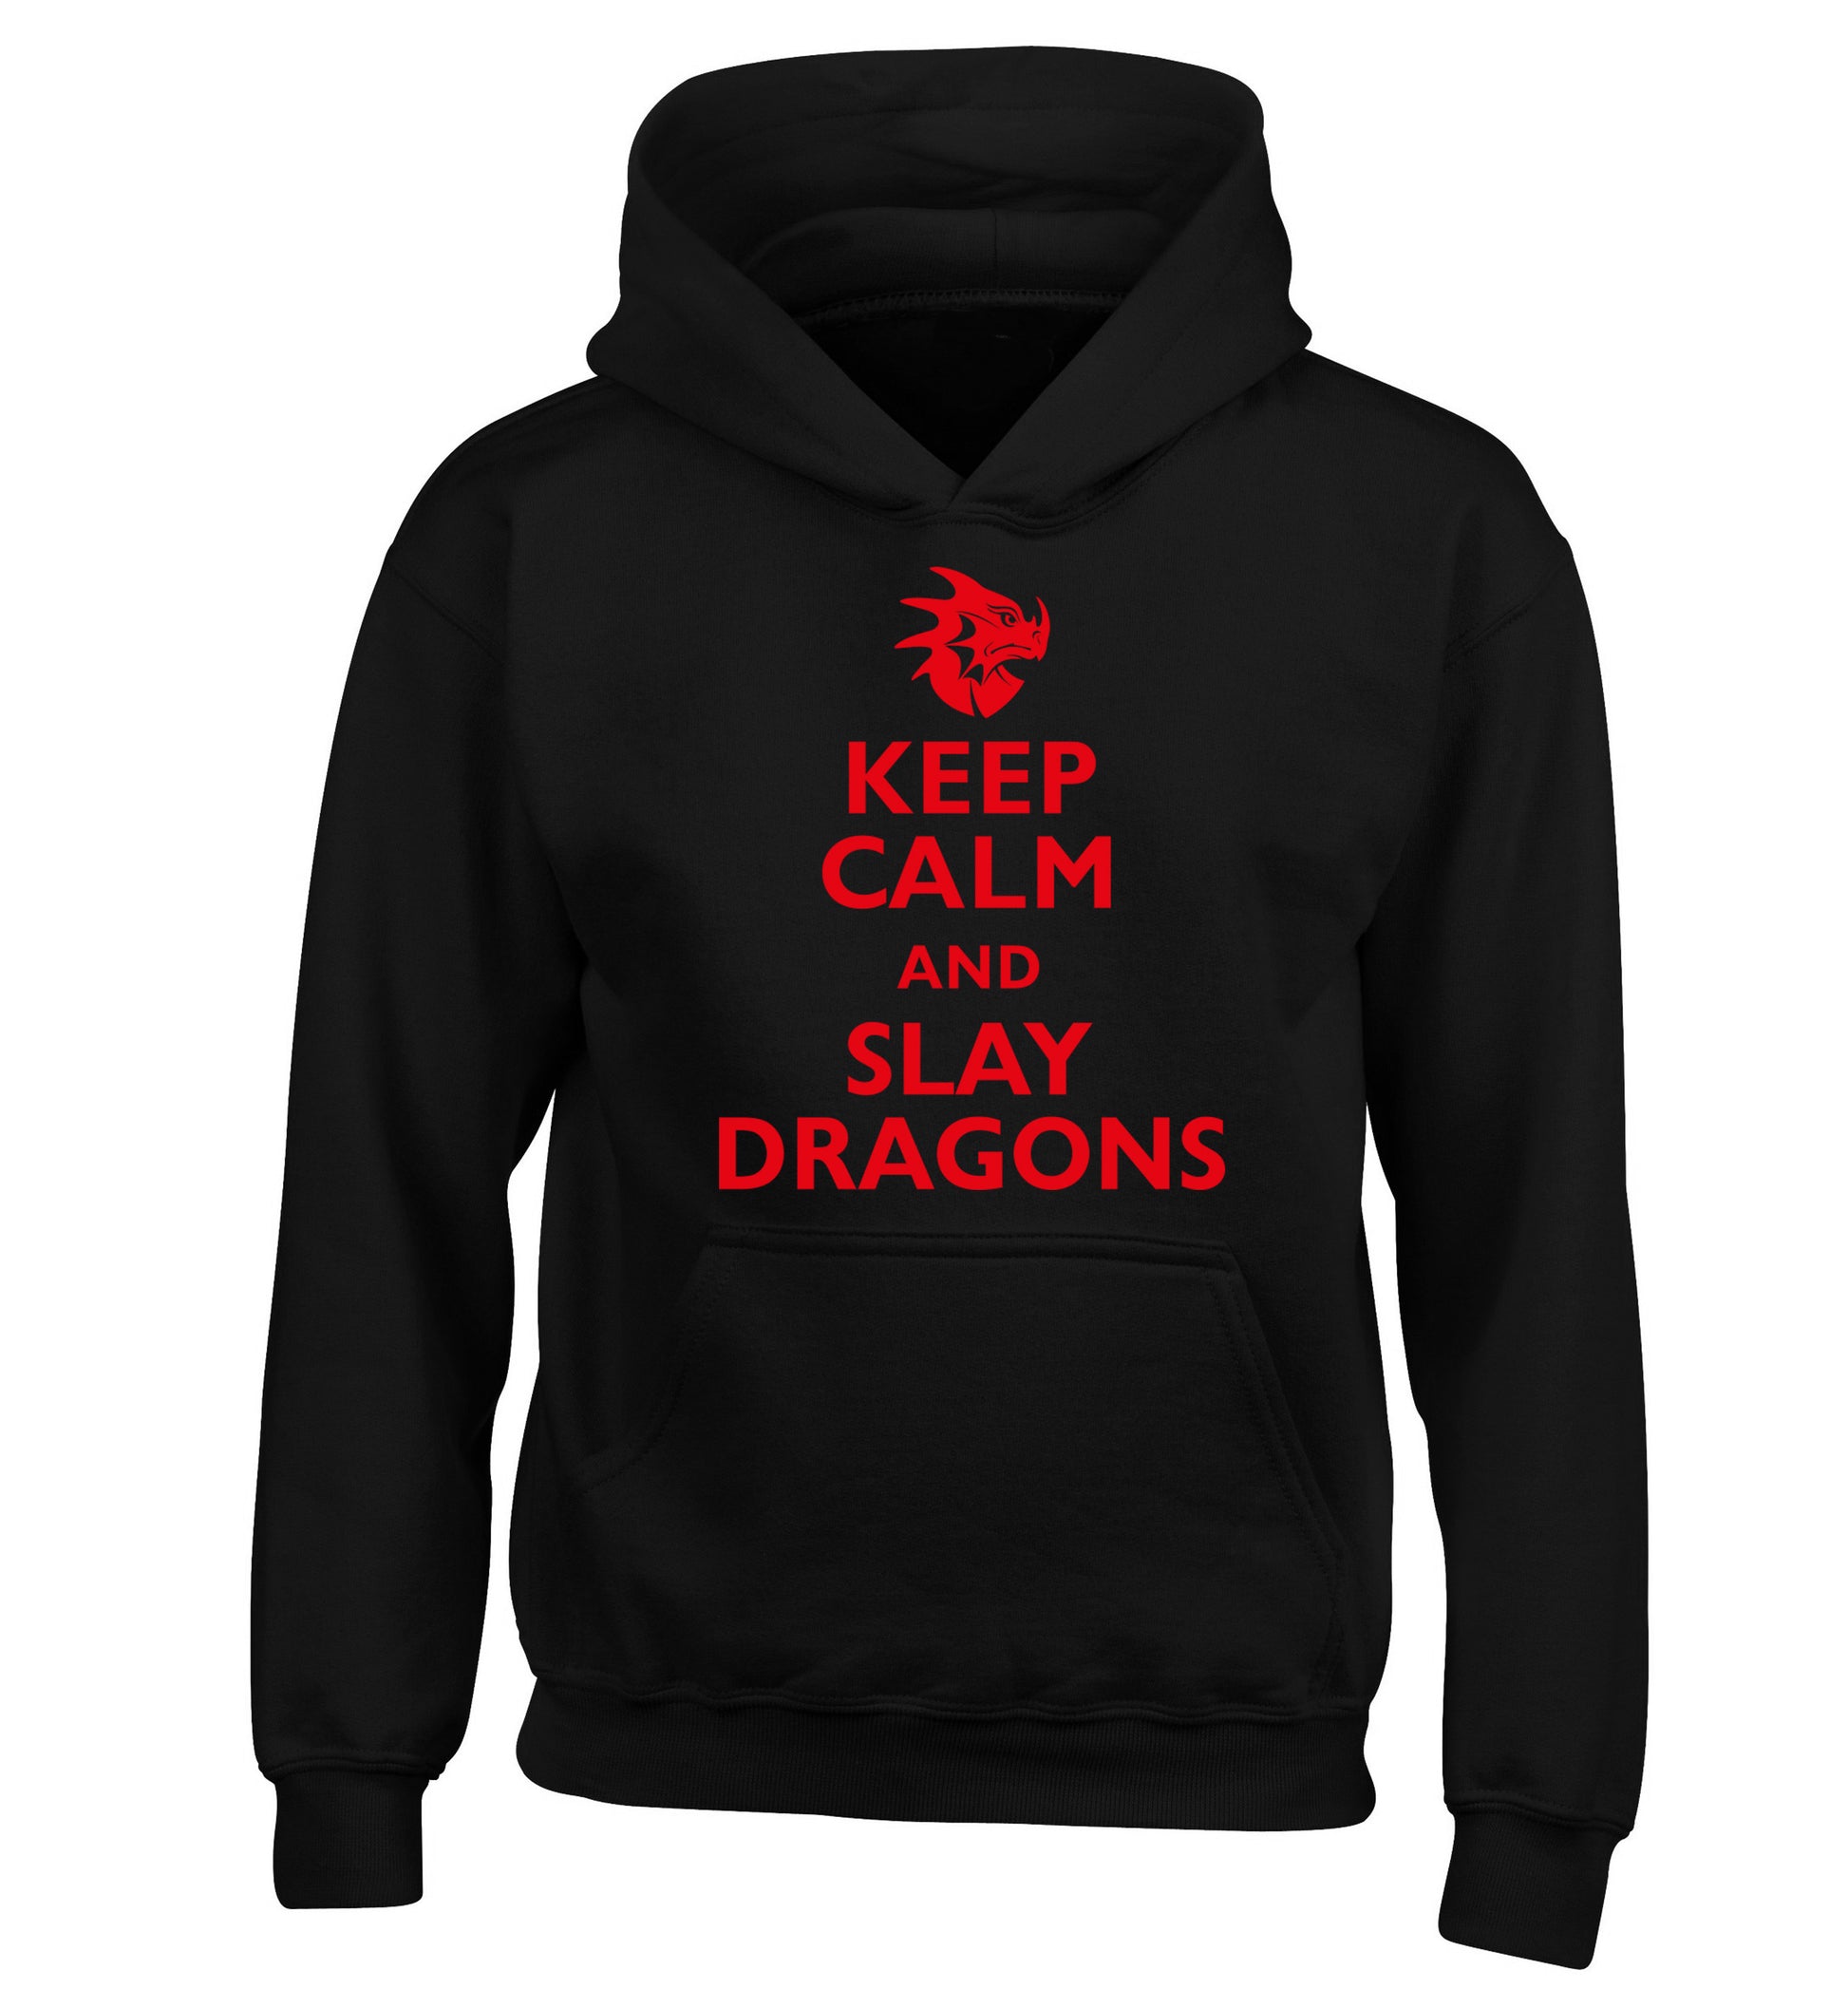 Keep calm and slay dragons children's black hoodie 12-14 Years